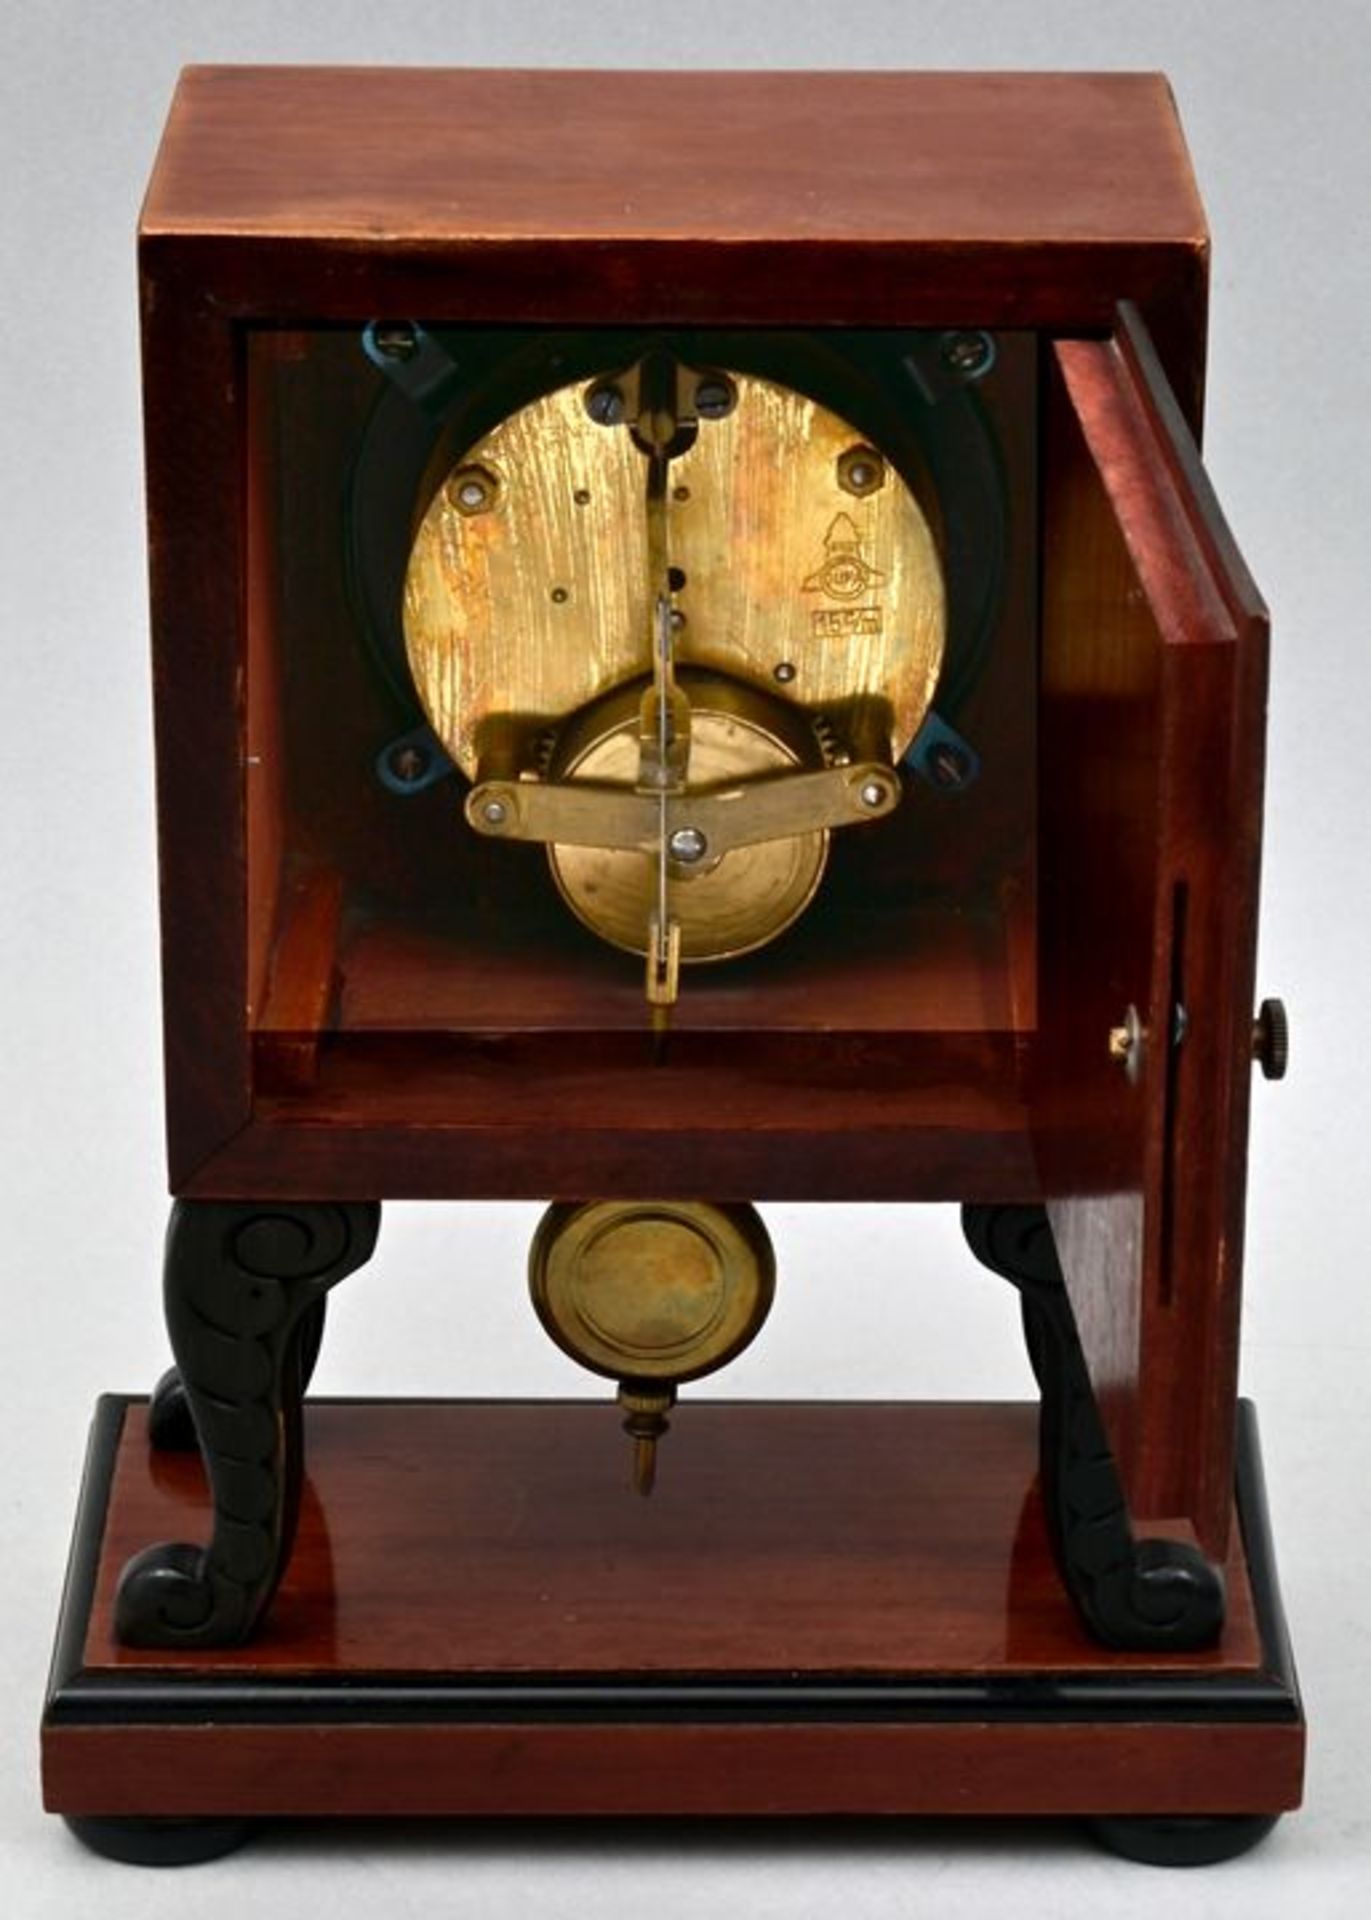 Tischuhr / Table clock - Image 4 of 8